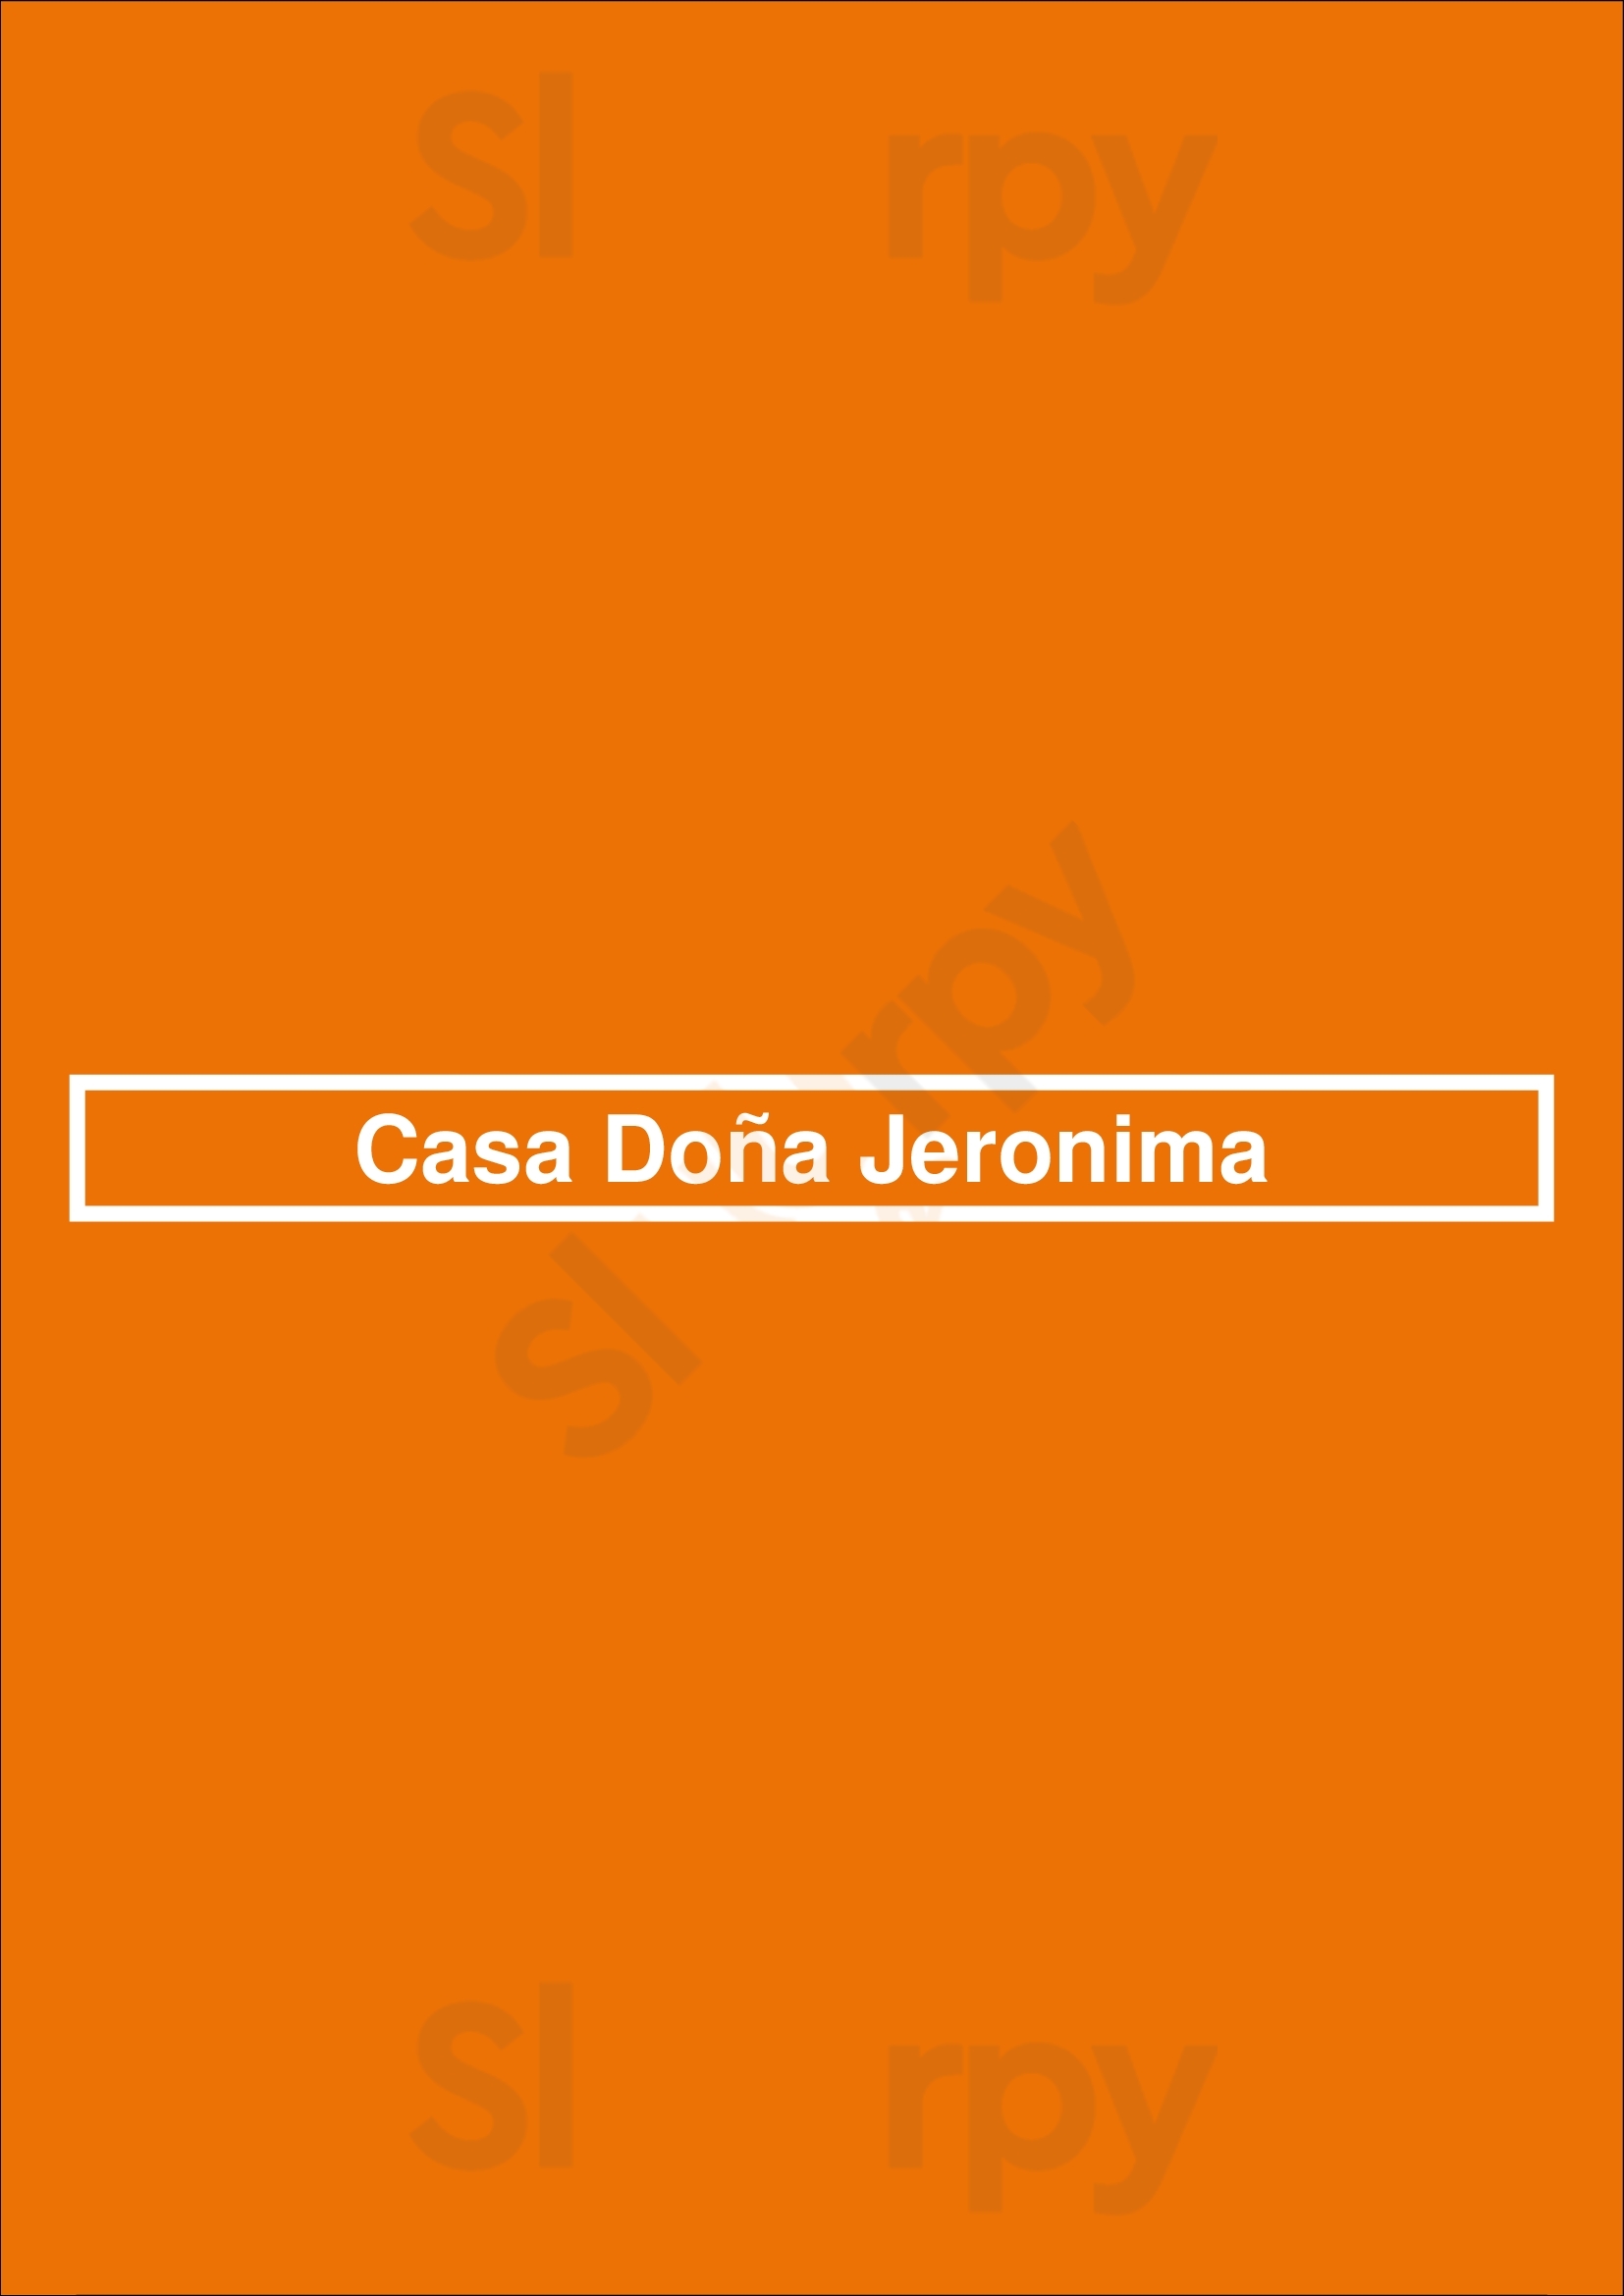 Casa Doña Jeronima Estepona Menu - 1